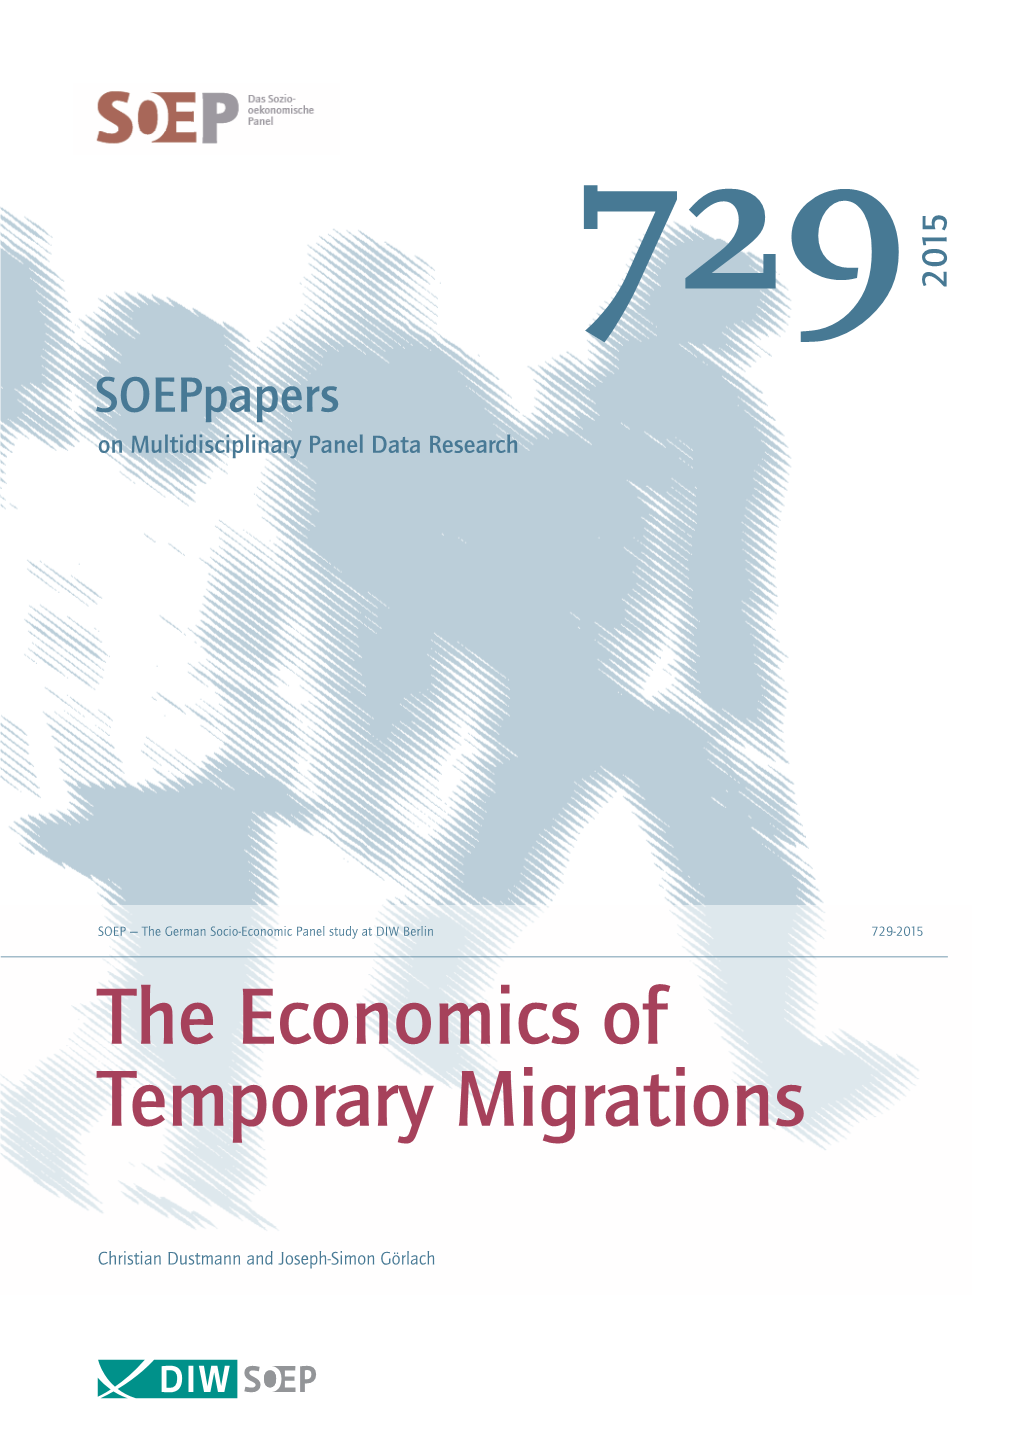 The Economics of Temporary Migrations